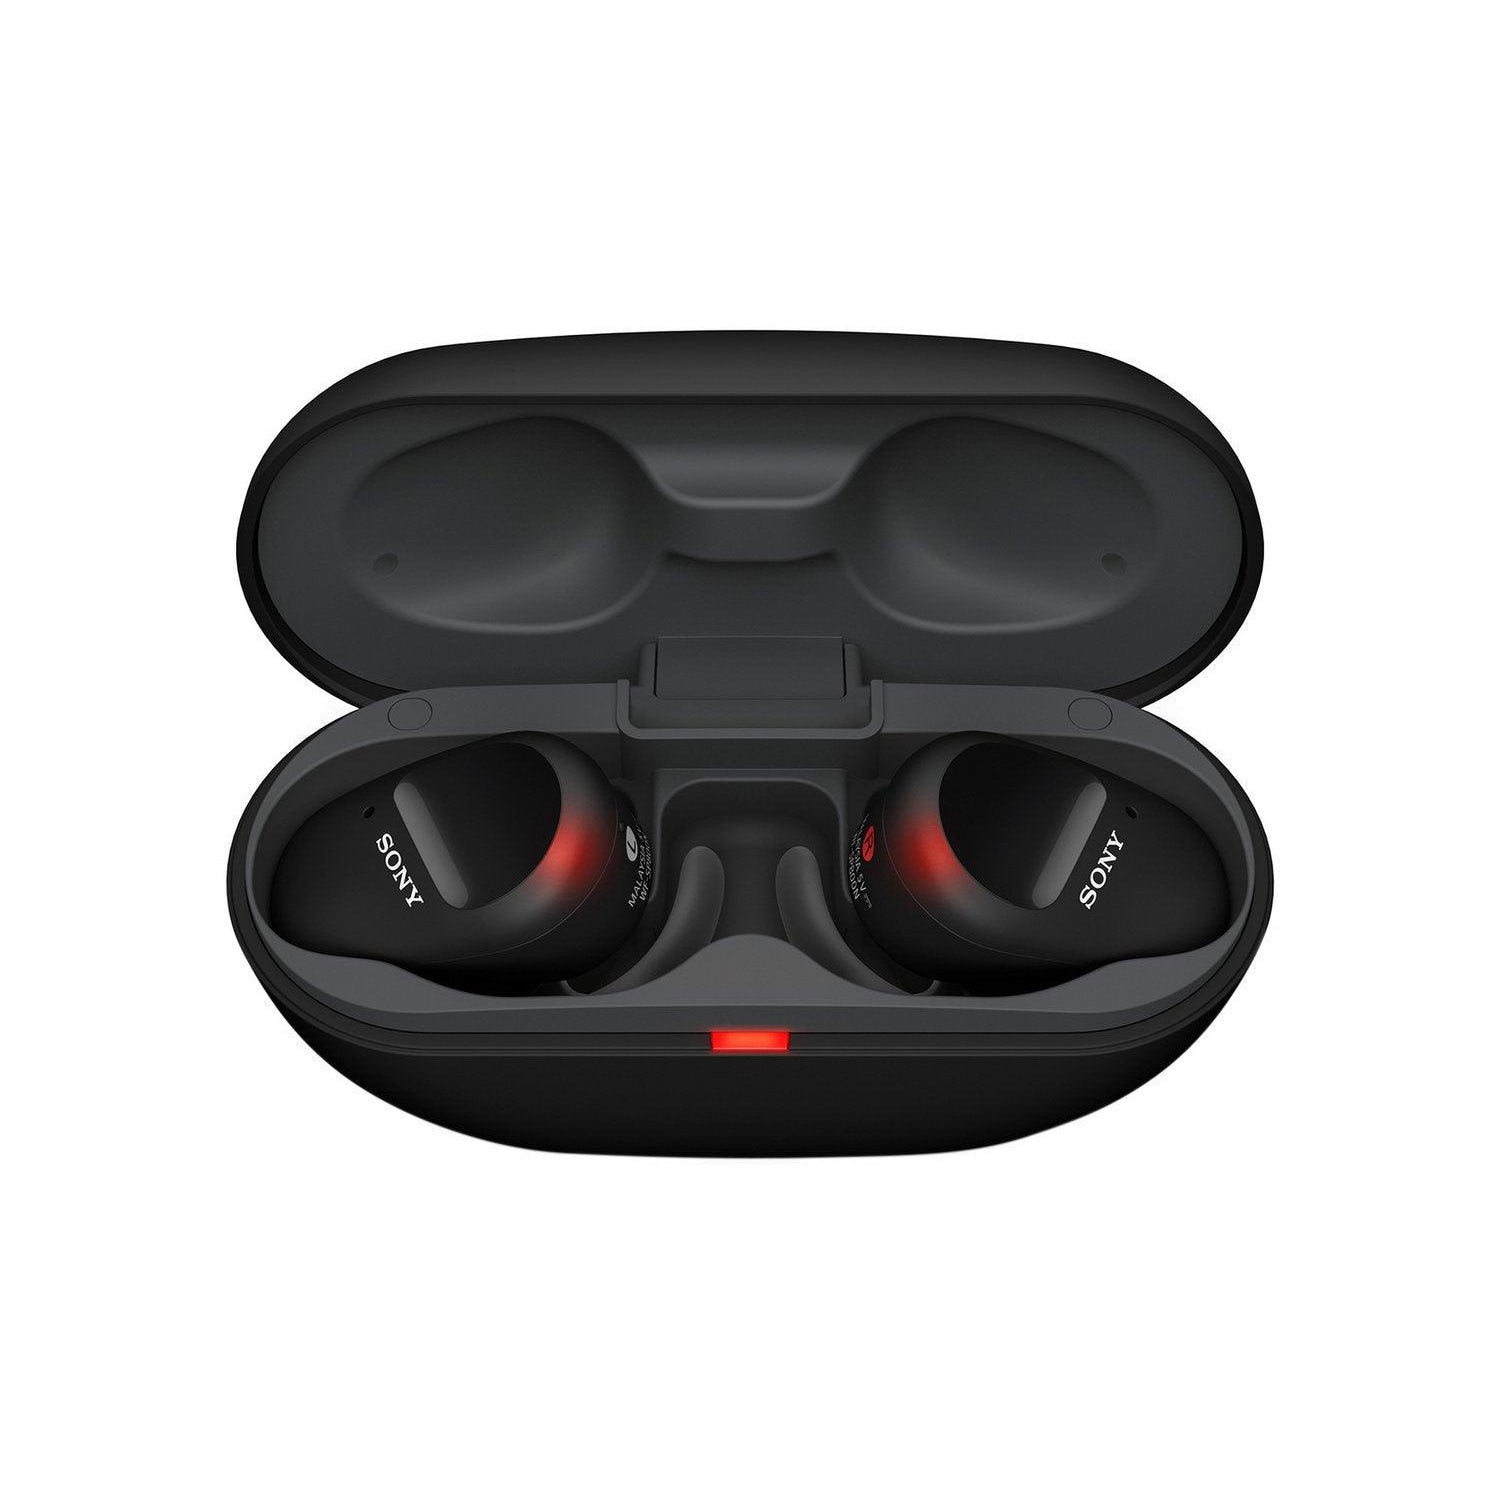 Sony WF-SP800N In-Ear True Wireless Earbuds - Black - Refurbished Good